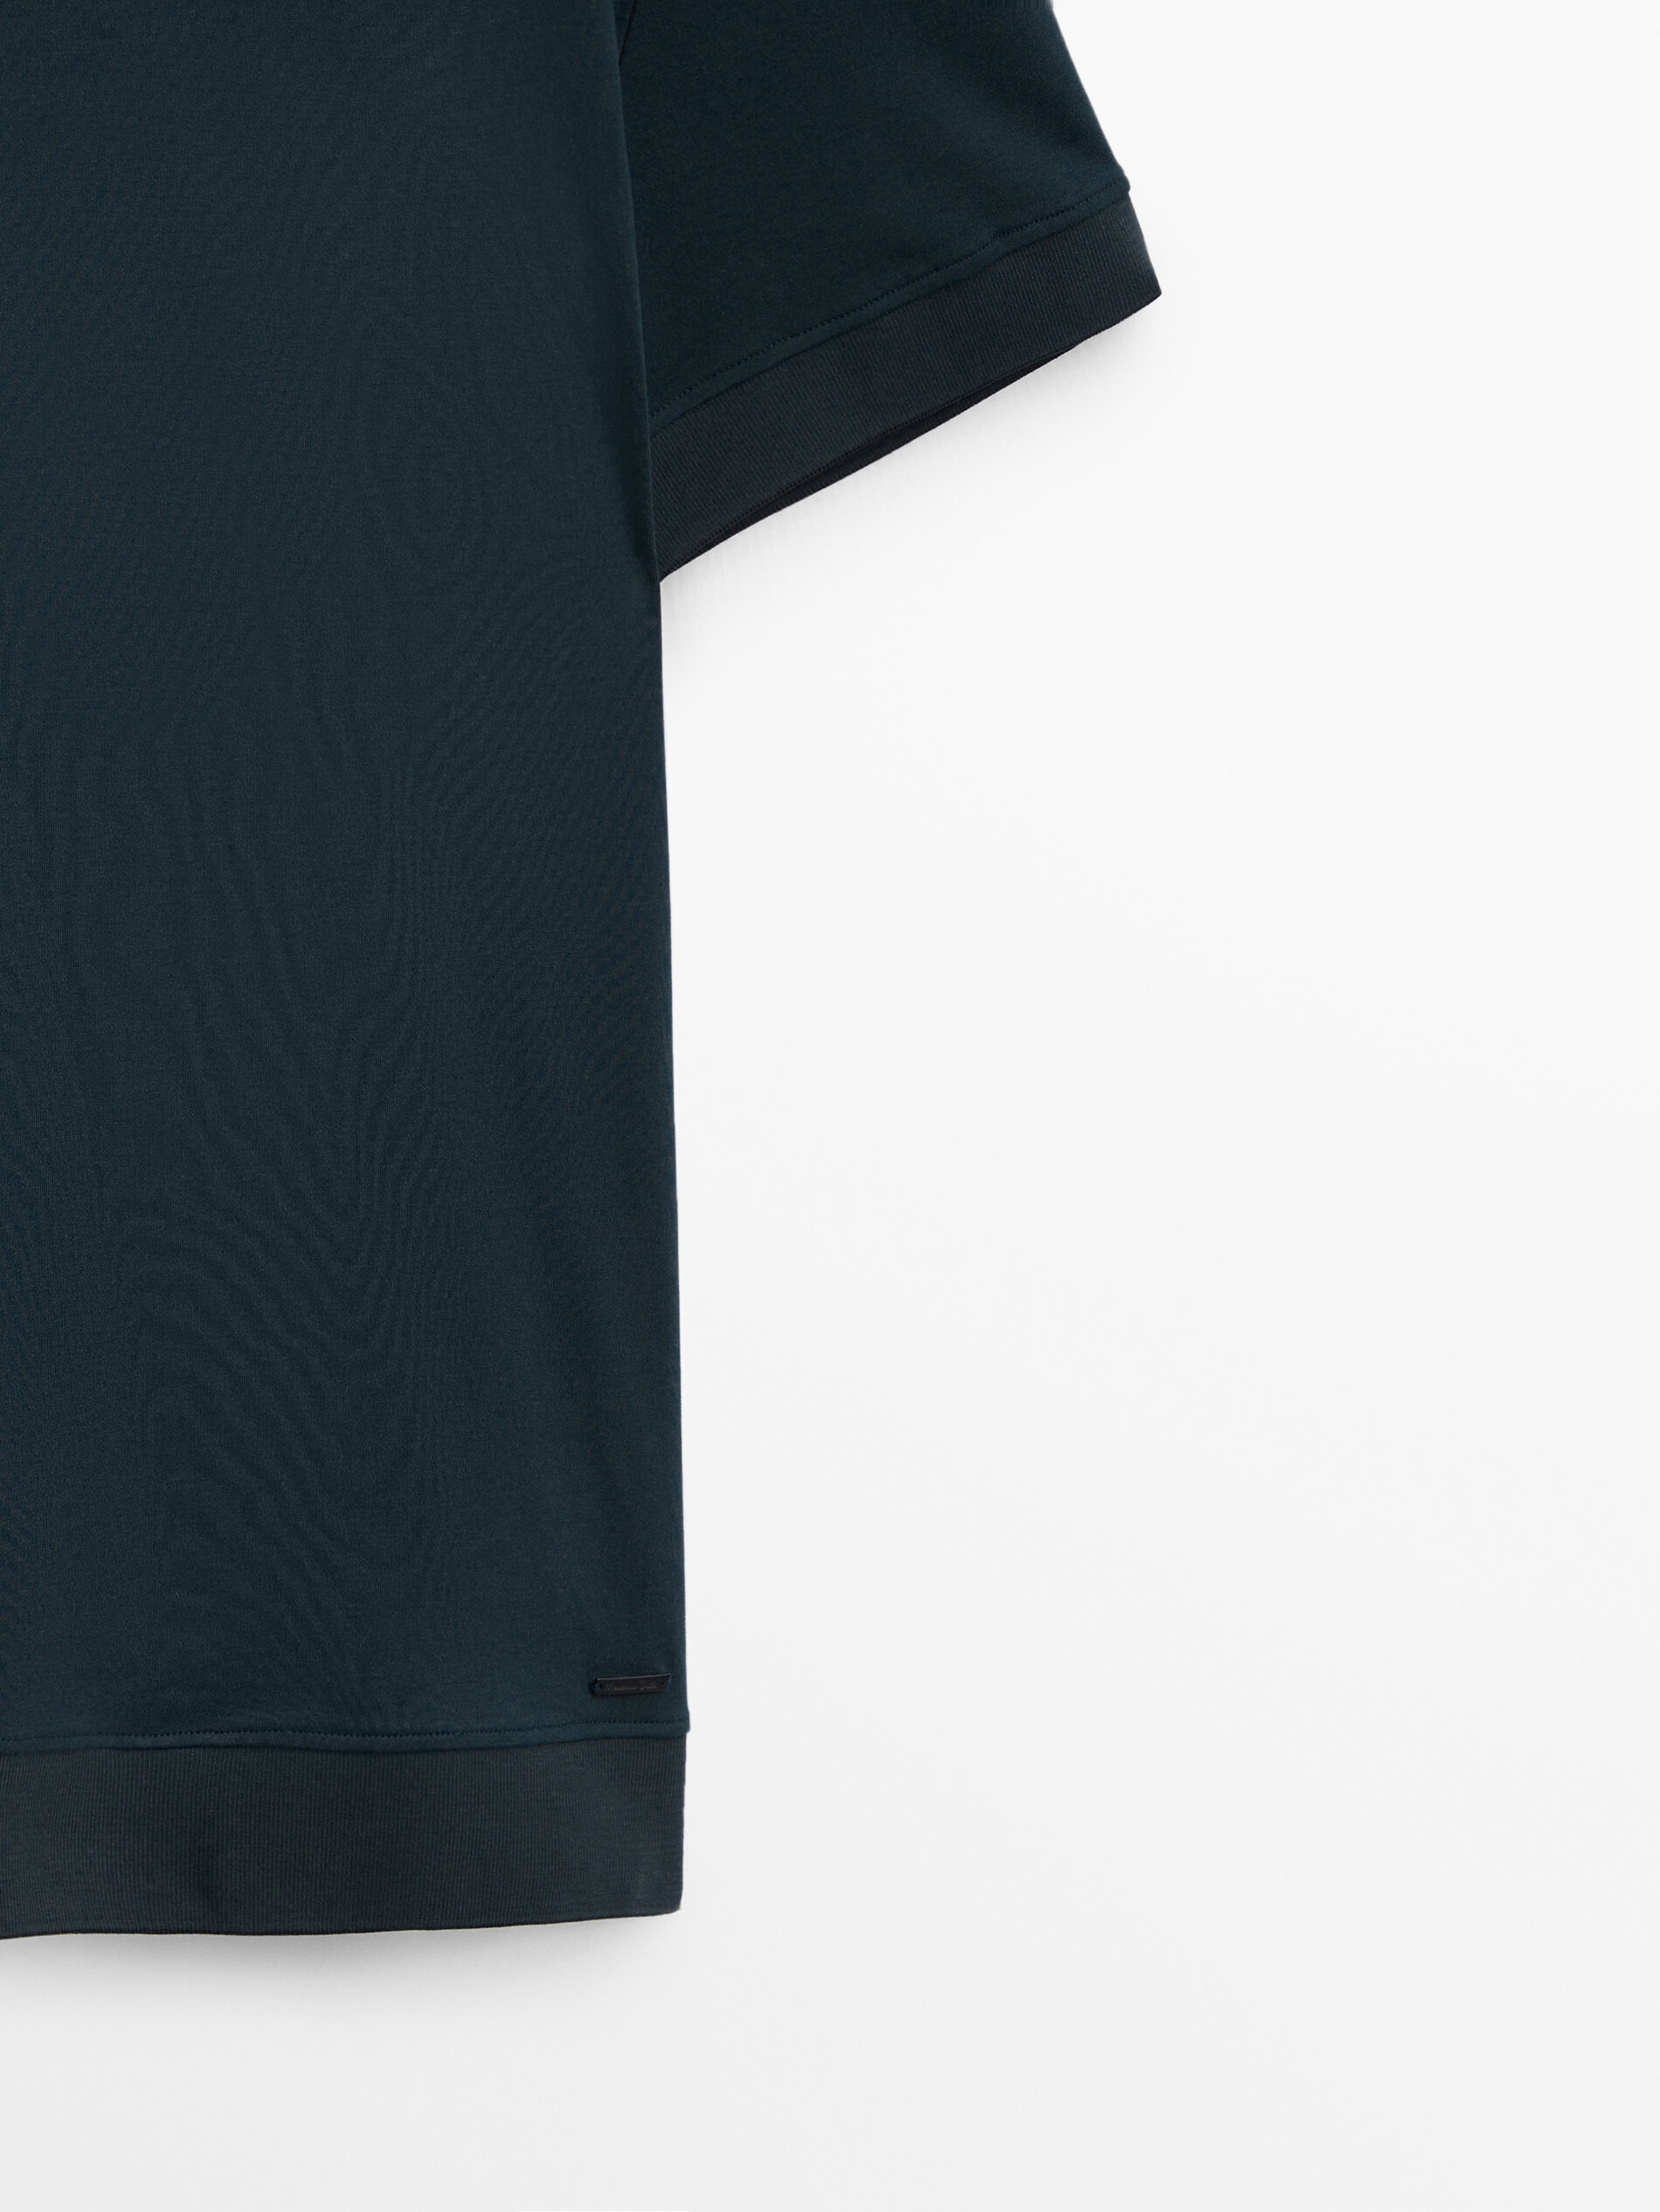 Massimo Dutti Kısa kollu kontrast sweatshirt. 3